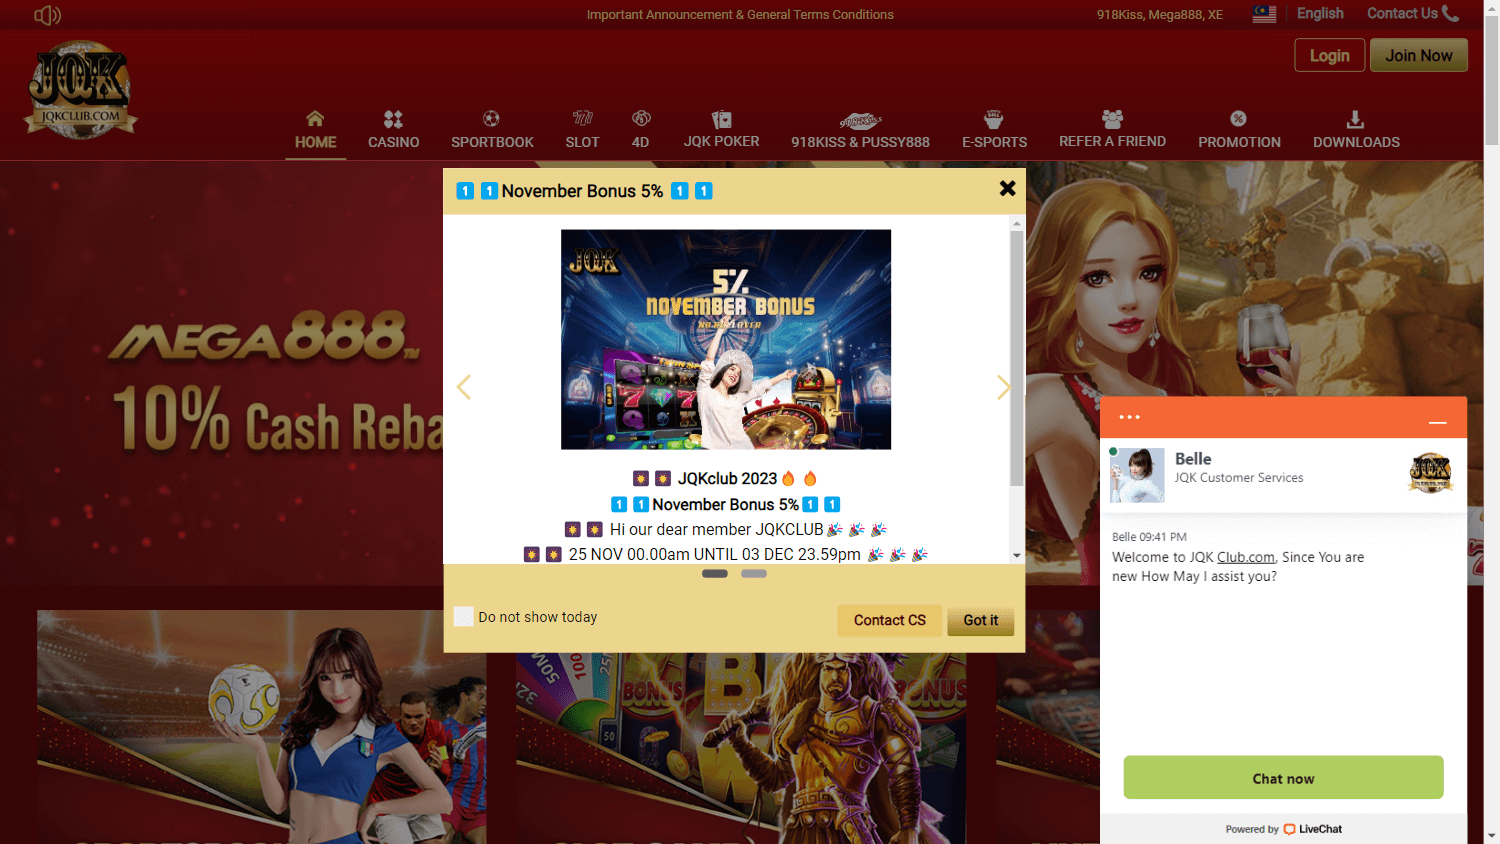 jqkclub_casino_homepage_desktop